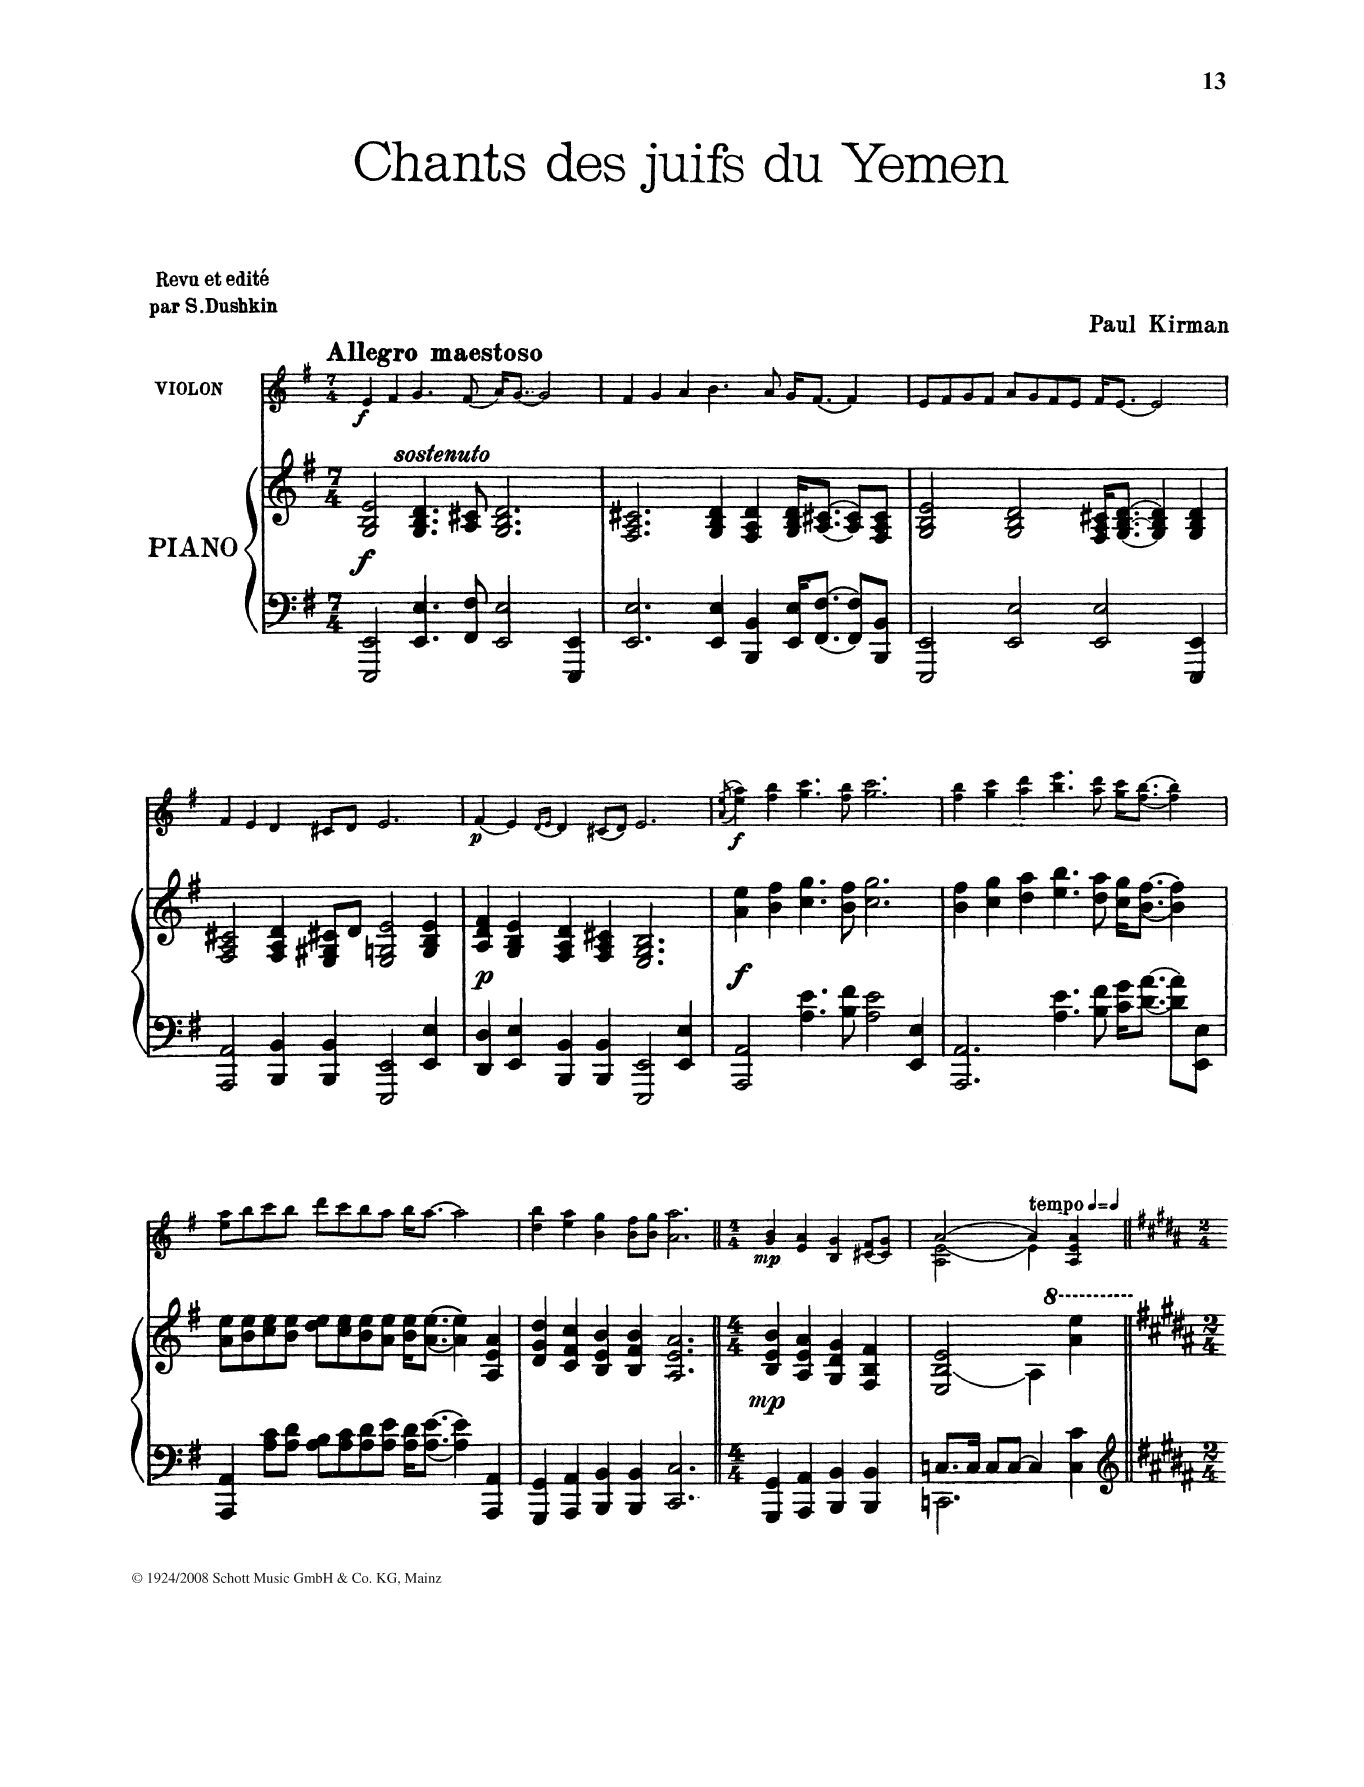 Download Paul Kirman Chants des juifs du Yemen Sheet Music and learn how to play String Solo PDF digital score in minutes